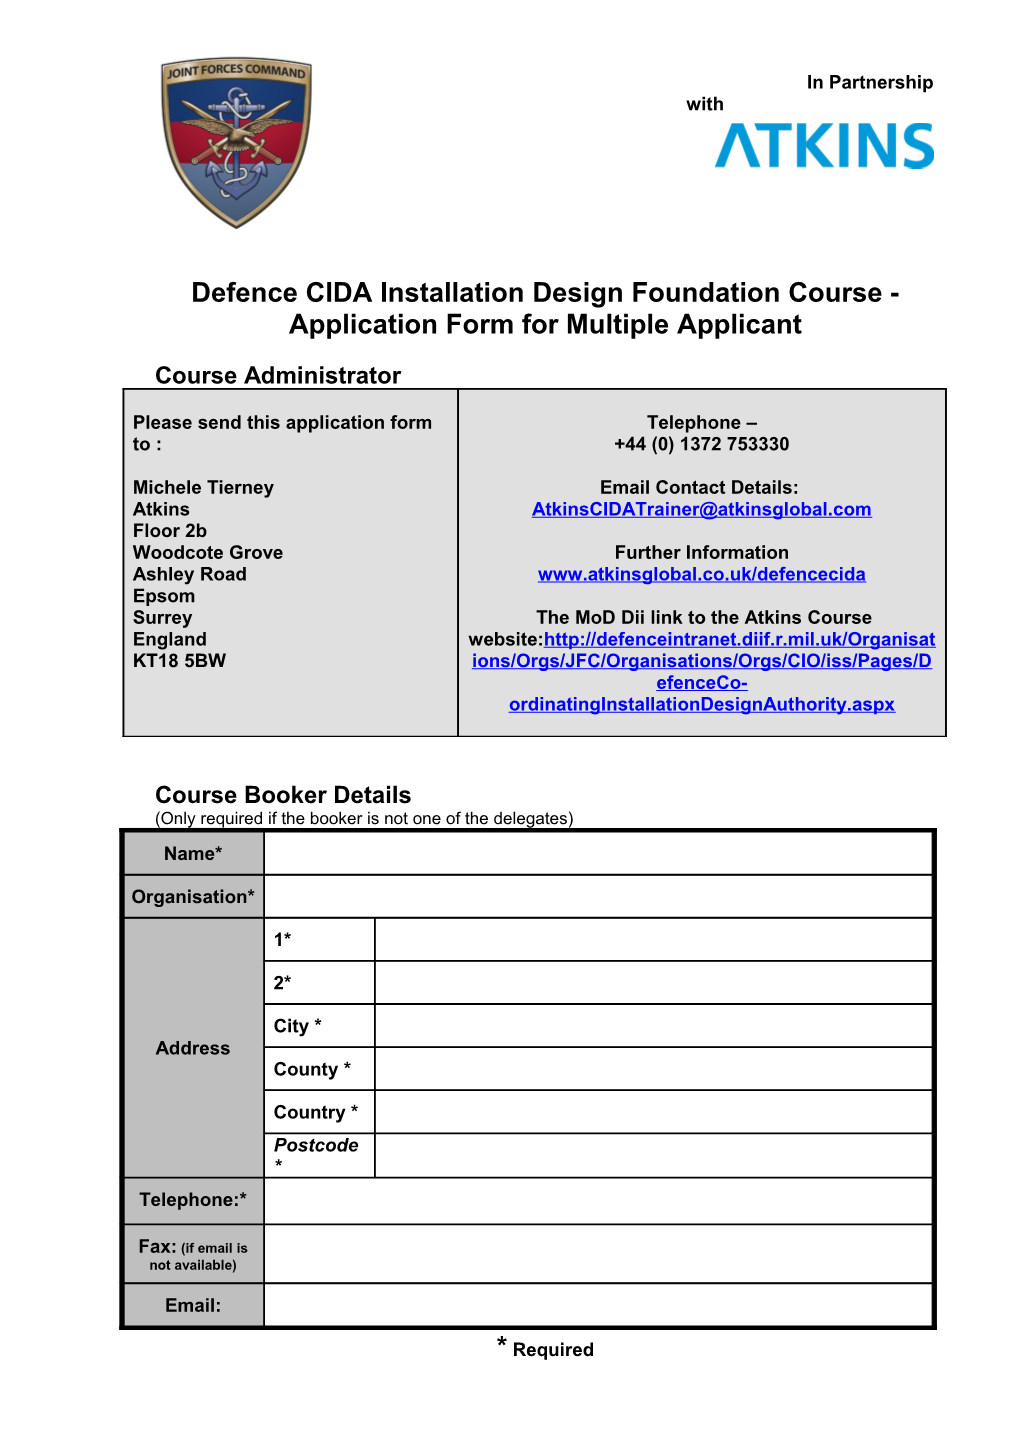 Defence Installation Design Course Application Form